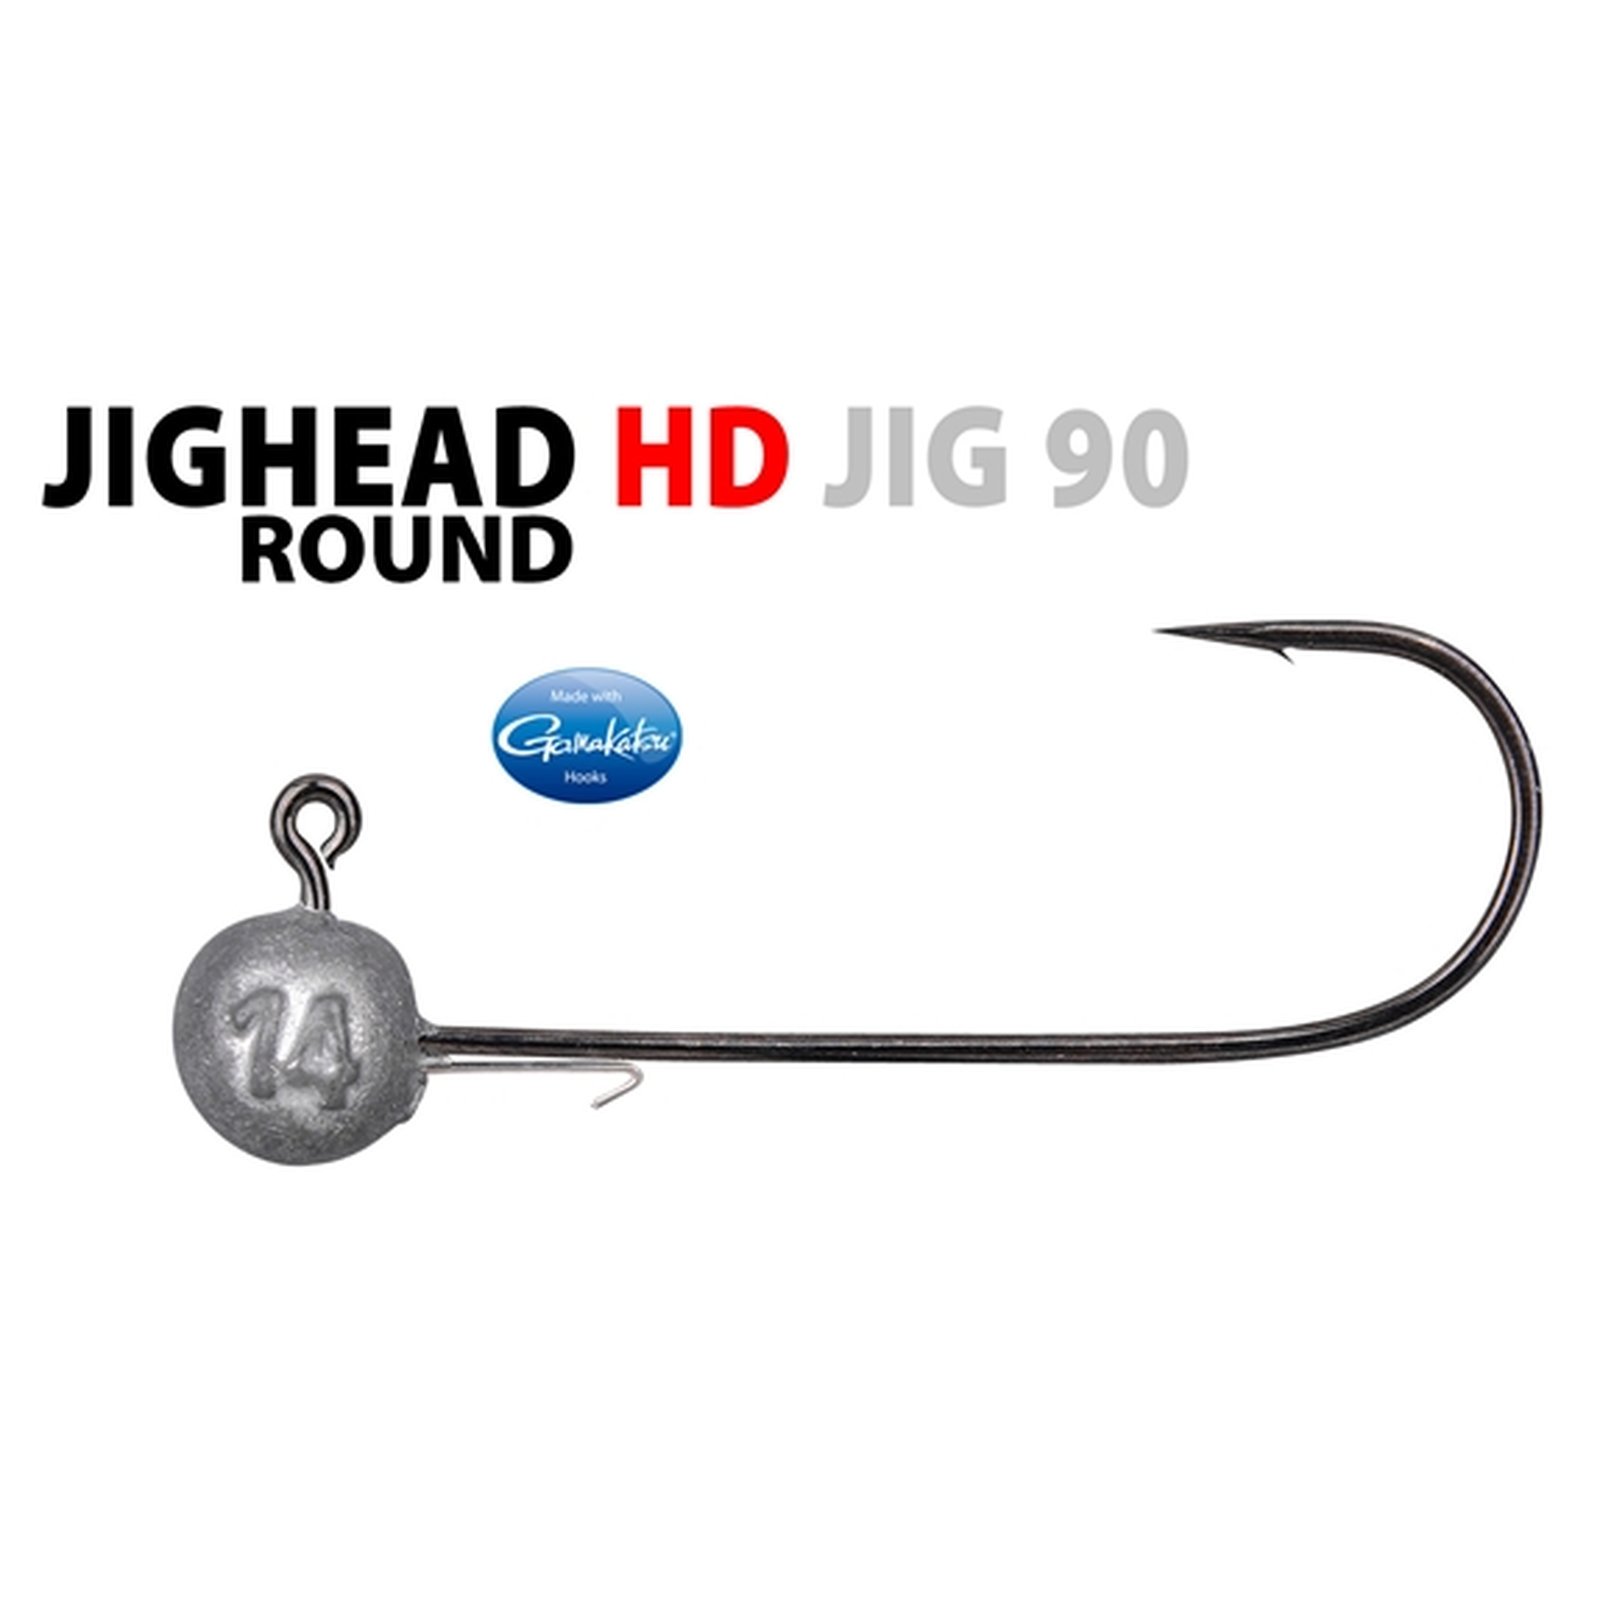 SPRO Round Jighead HD Jig 90 | Gr.4/0 | 3 Stk. 14g